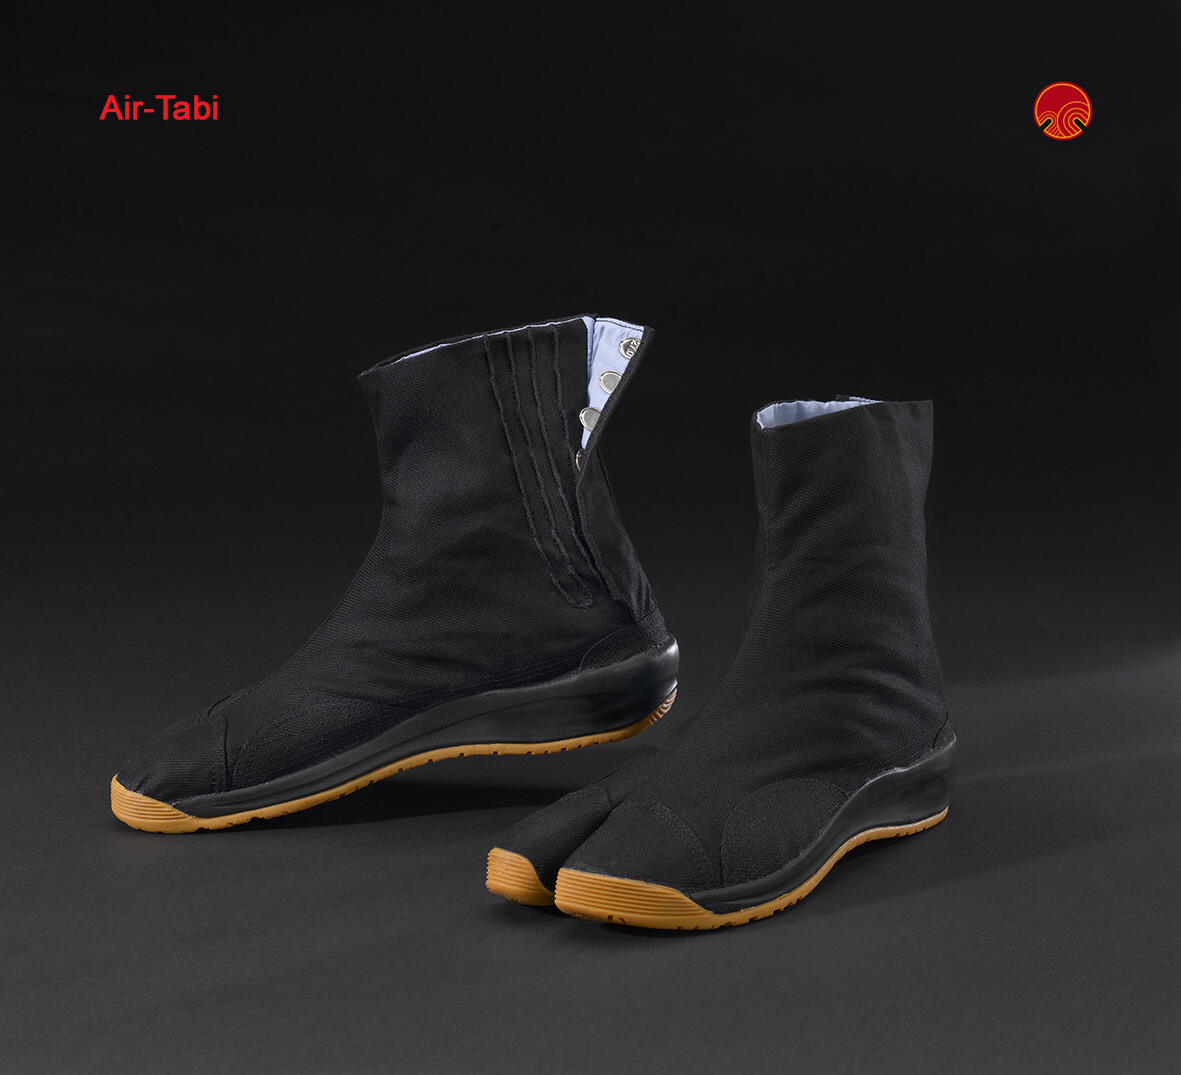 Japanese Matsuri Air Tabi-Shoes in black (66)